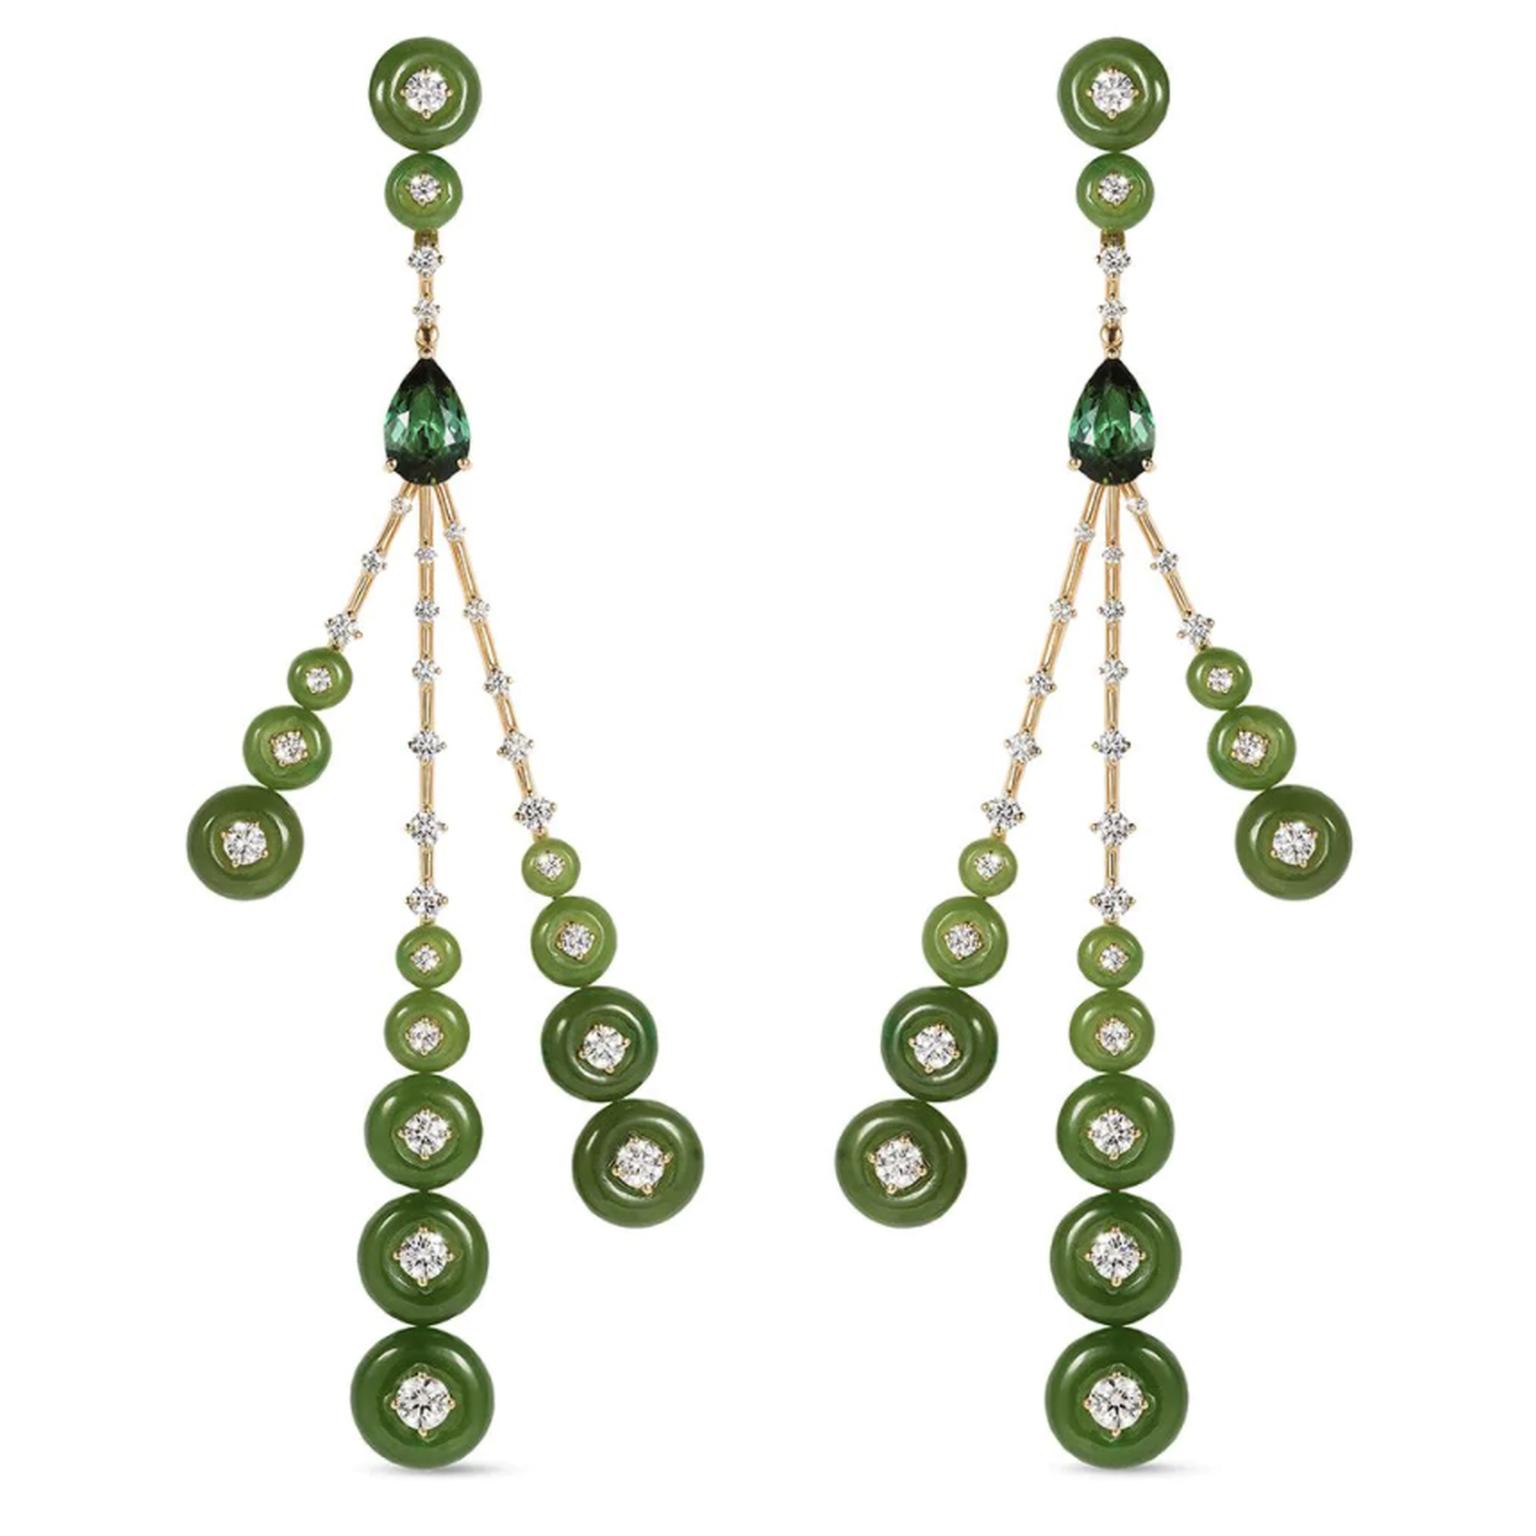 Jade earrings by Fernando Jorge